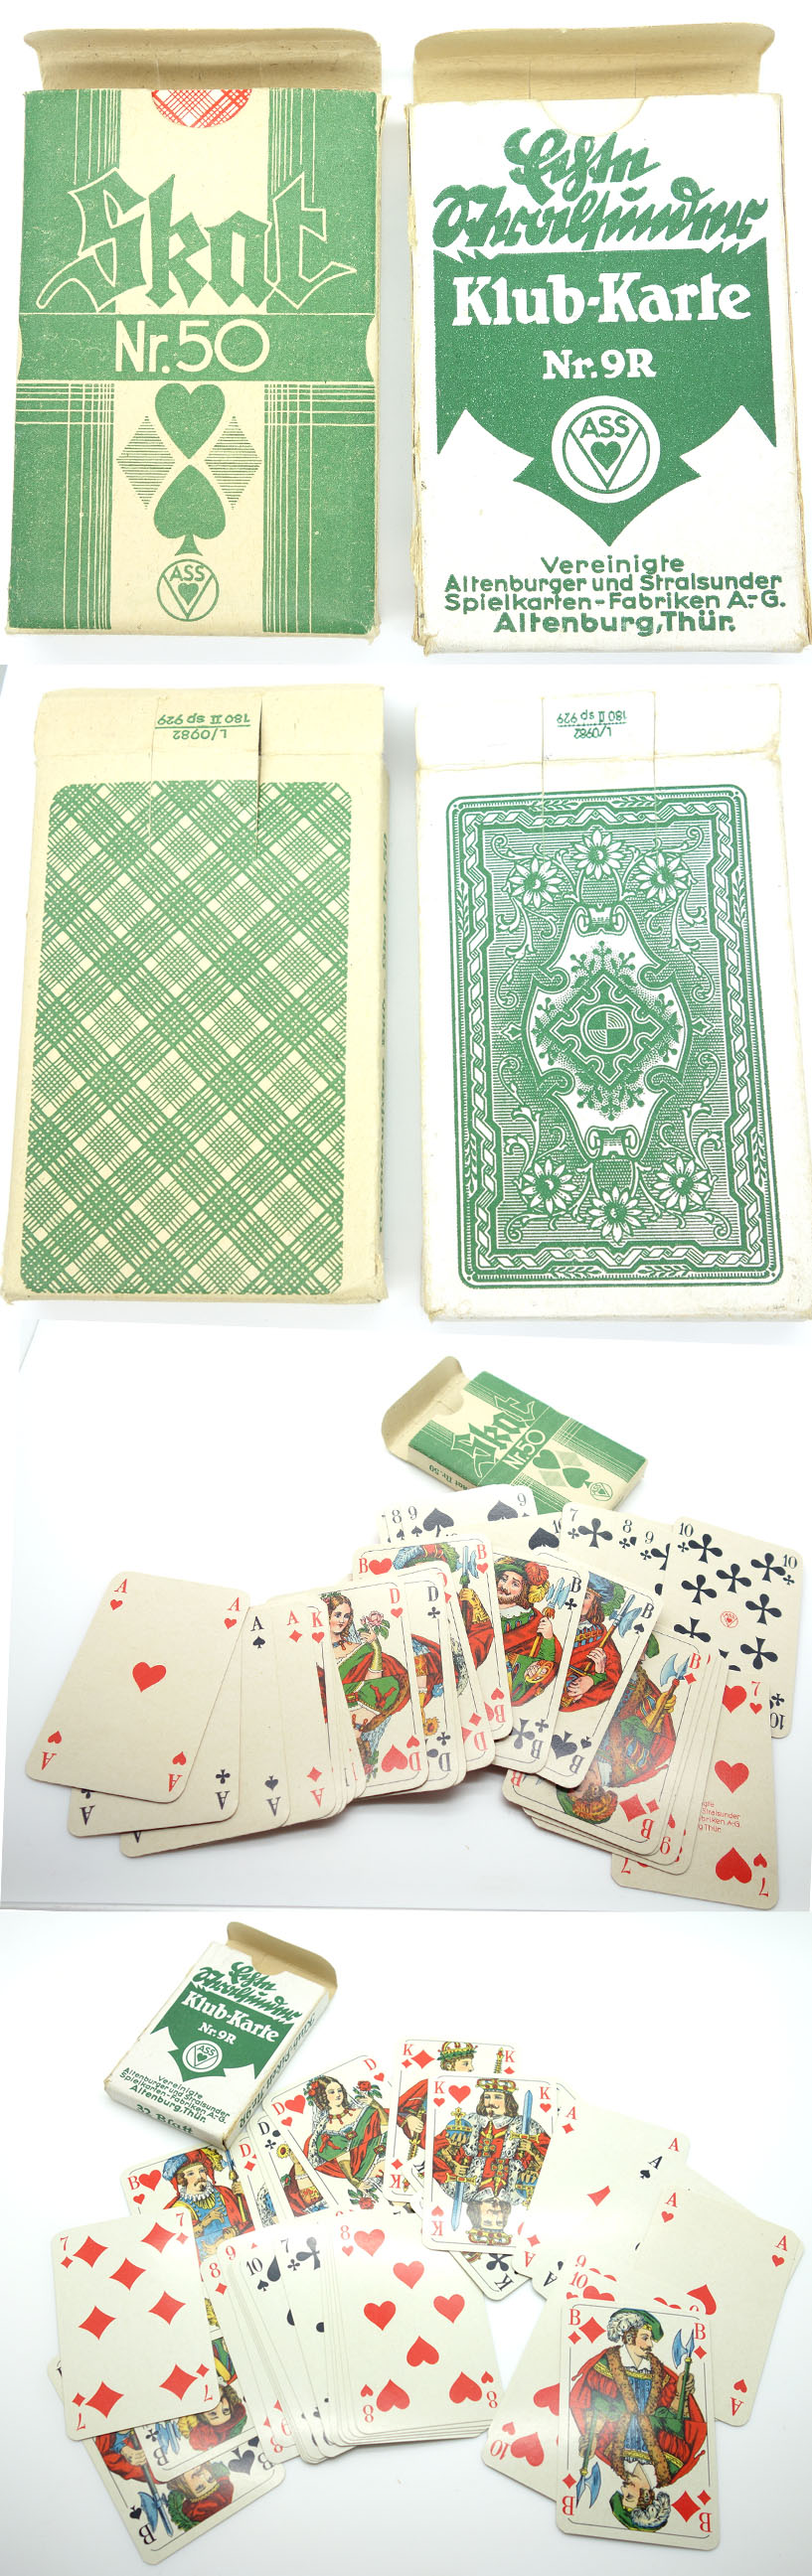 2 Packs of Skat cards